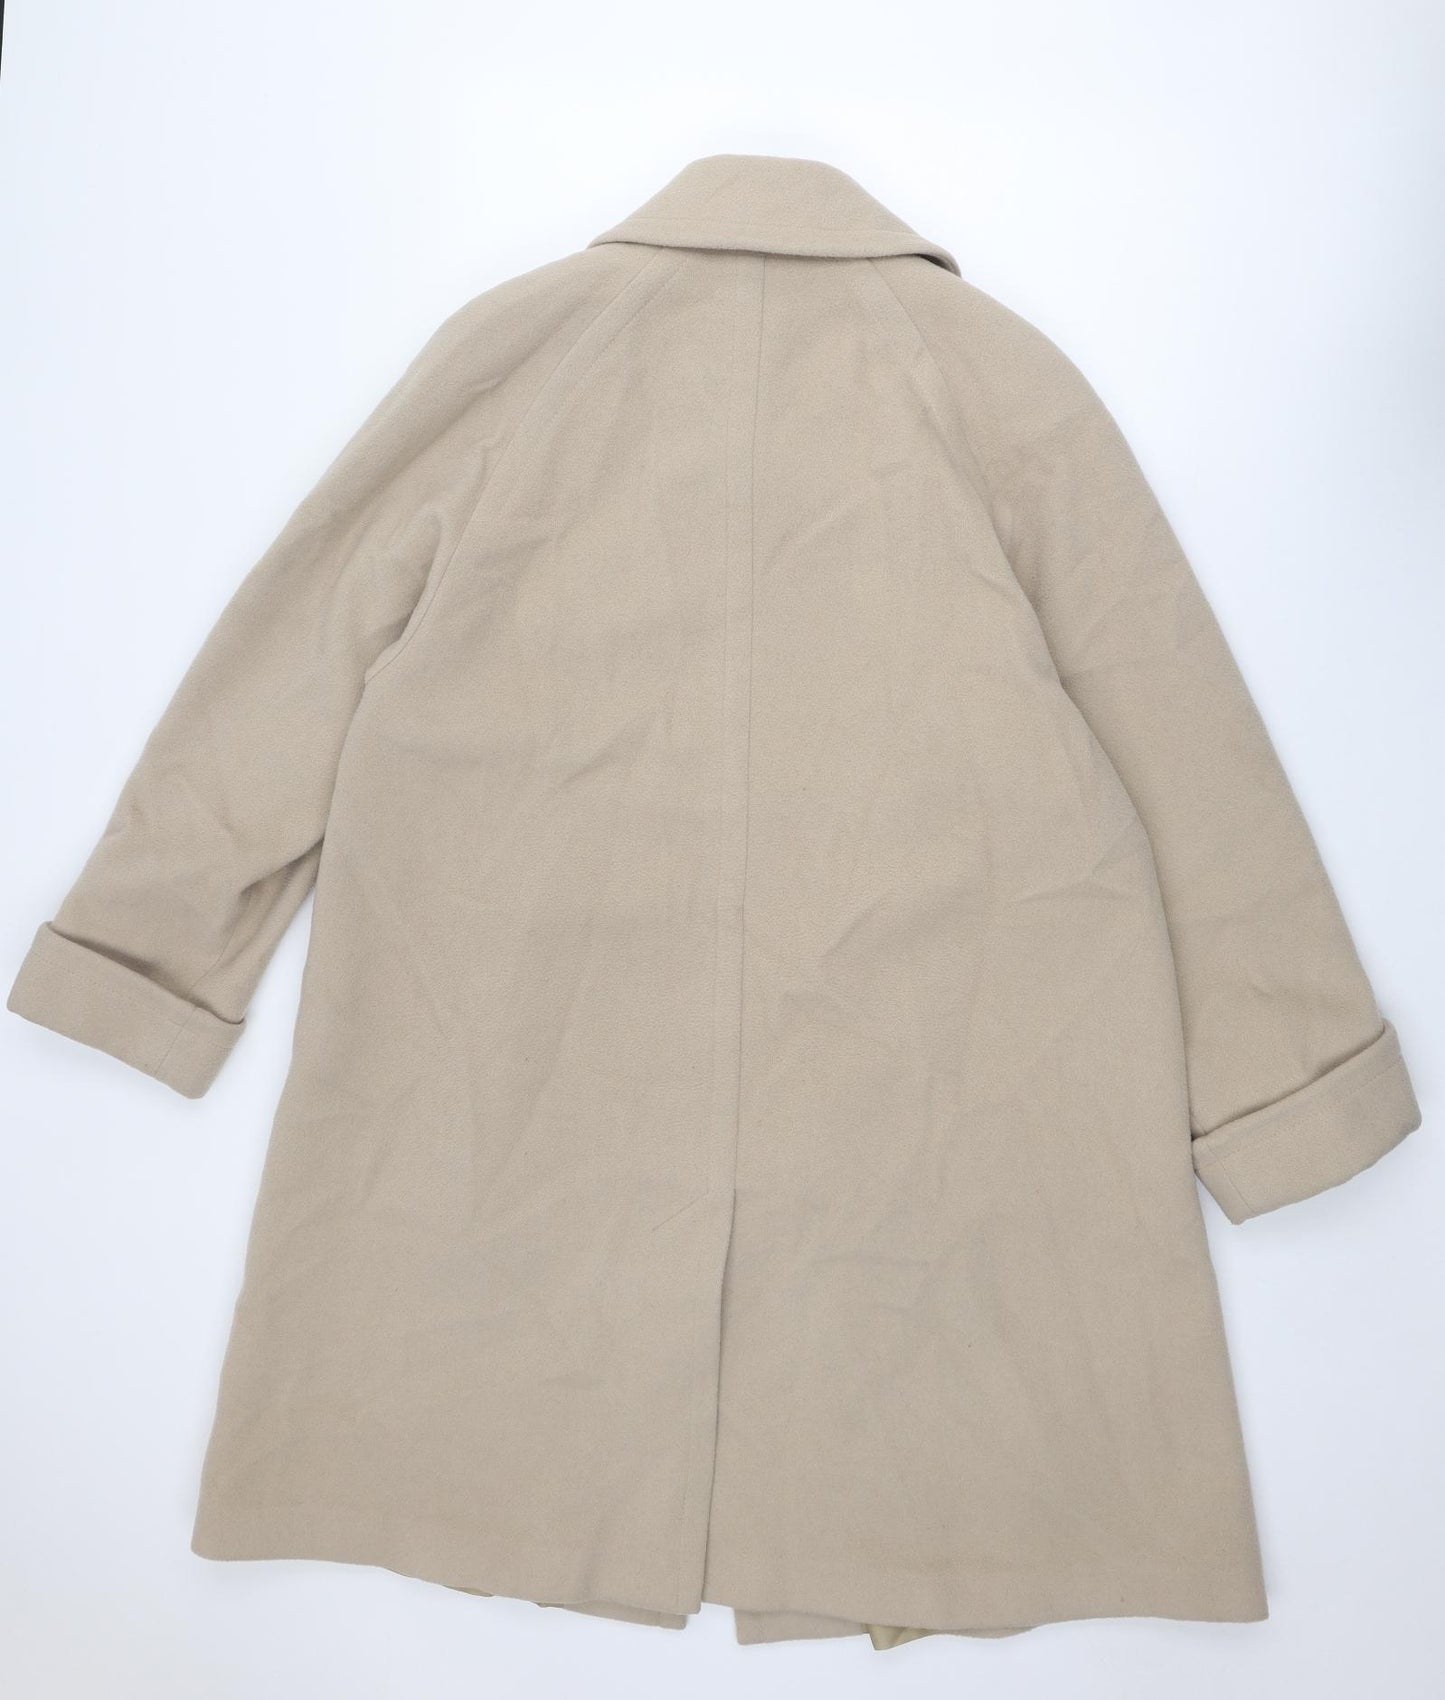 St Michael Womens Beige Overcoat Coat Size 14 Button